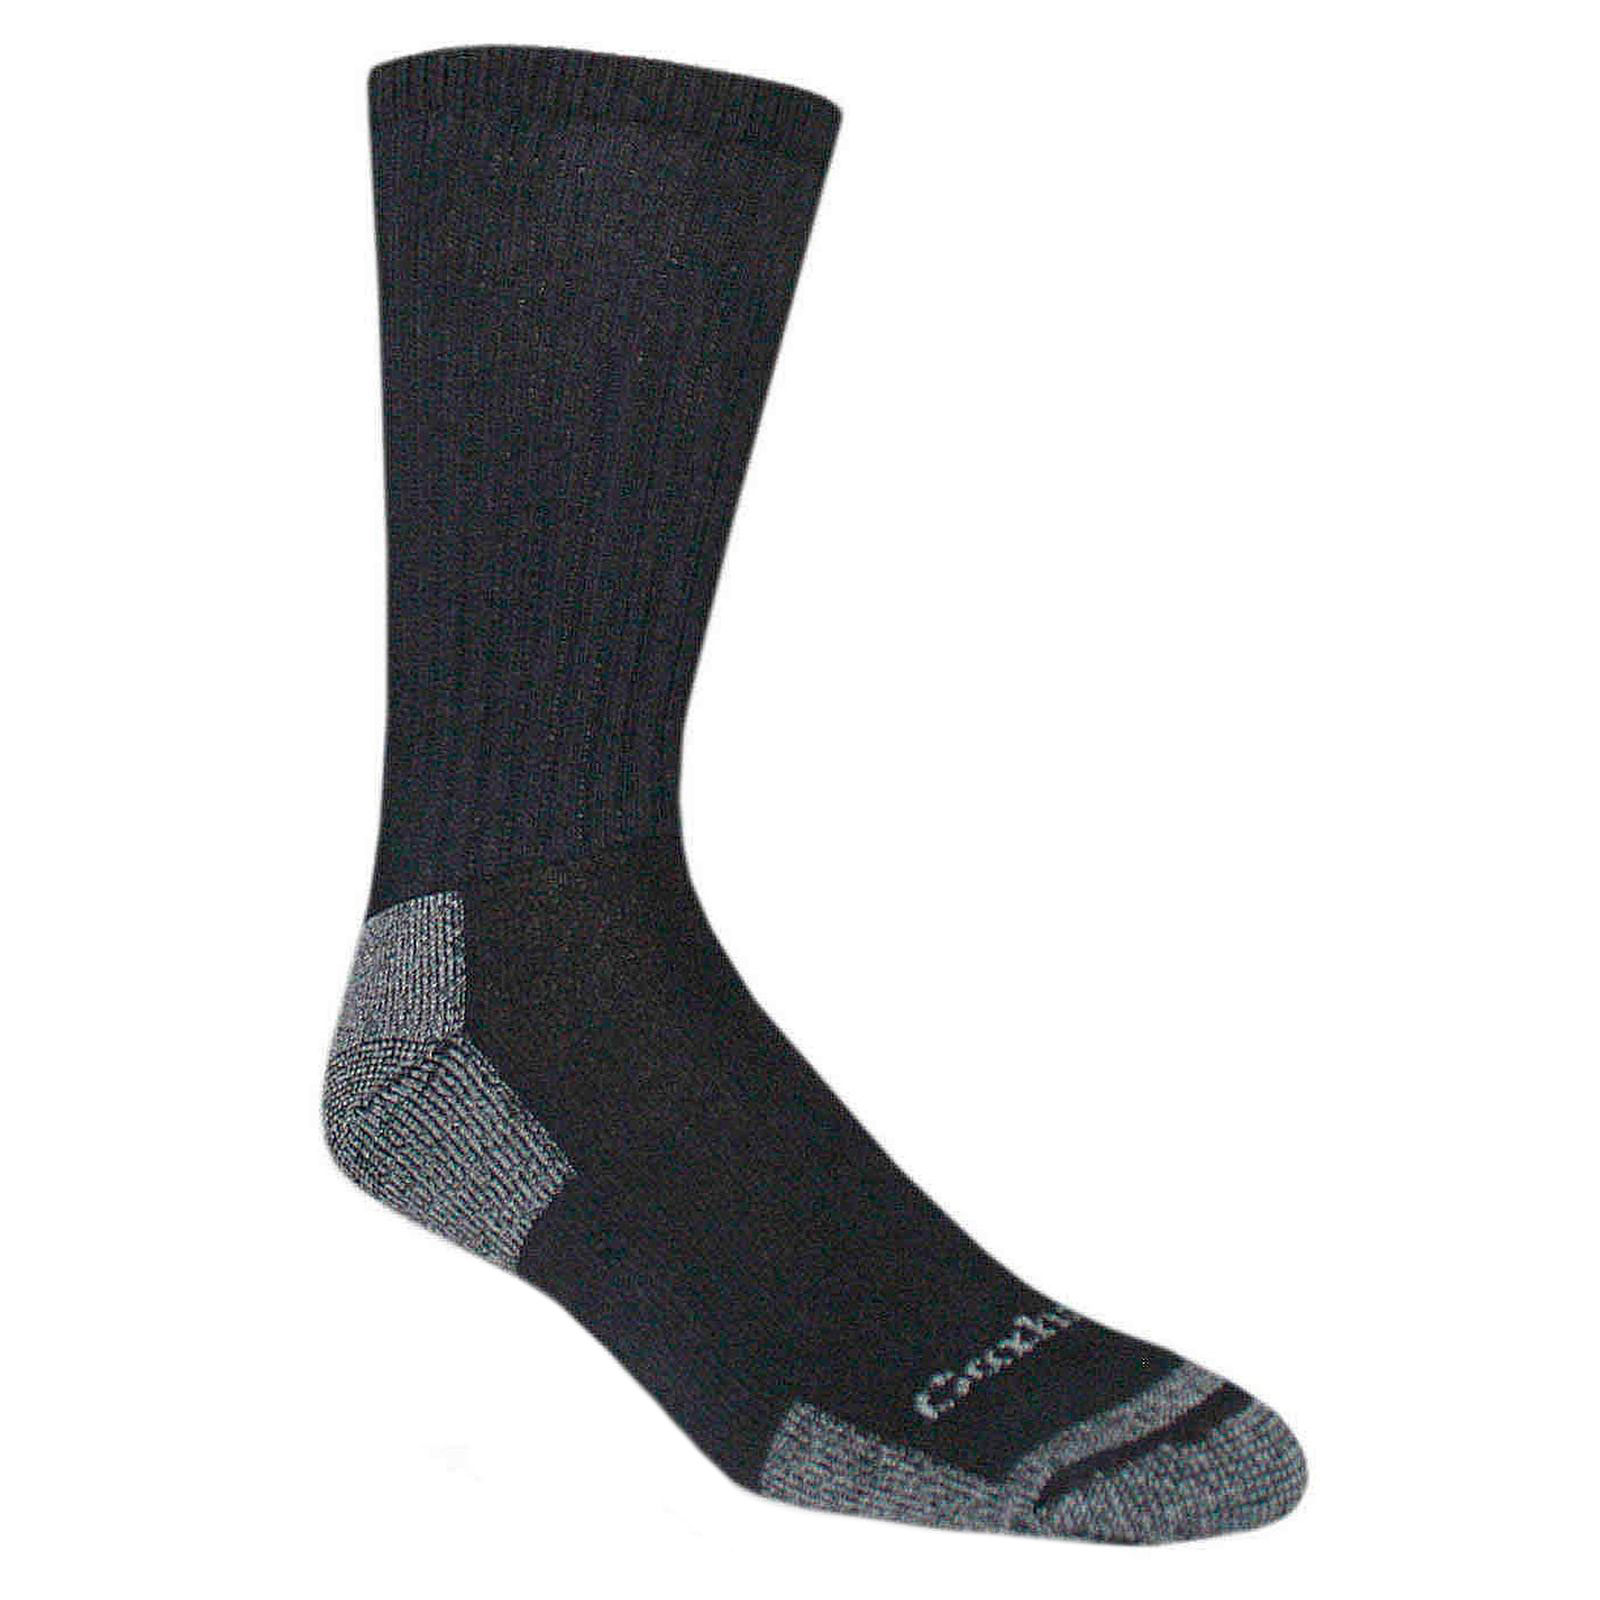 Carhartt  Men's All Season Work Socks - 3 pair